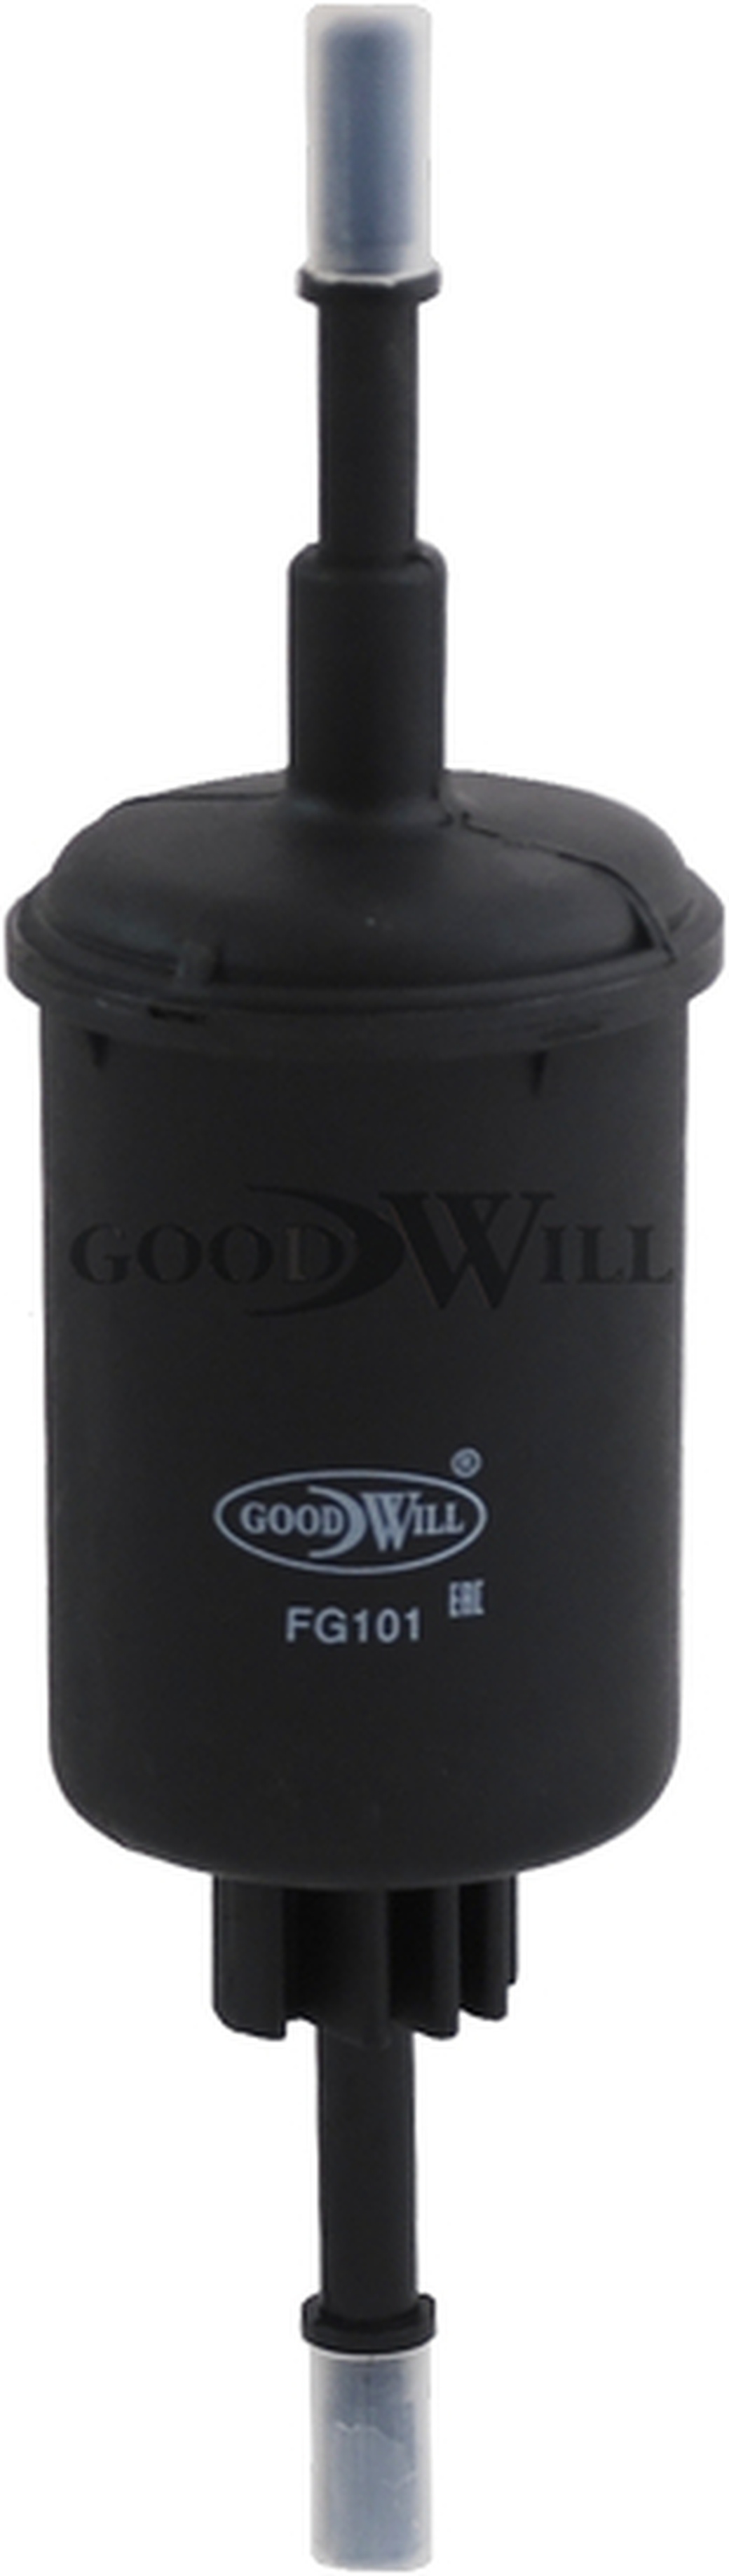 Фильтр топливный GoodWill FG101 для FORD FIESTA,MAZDA 2 фото